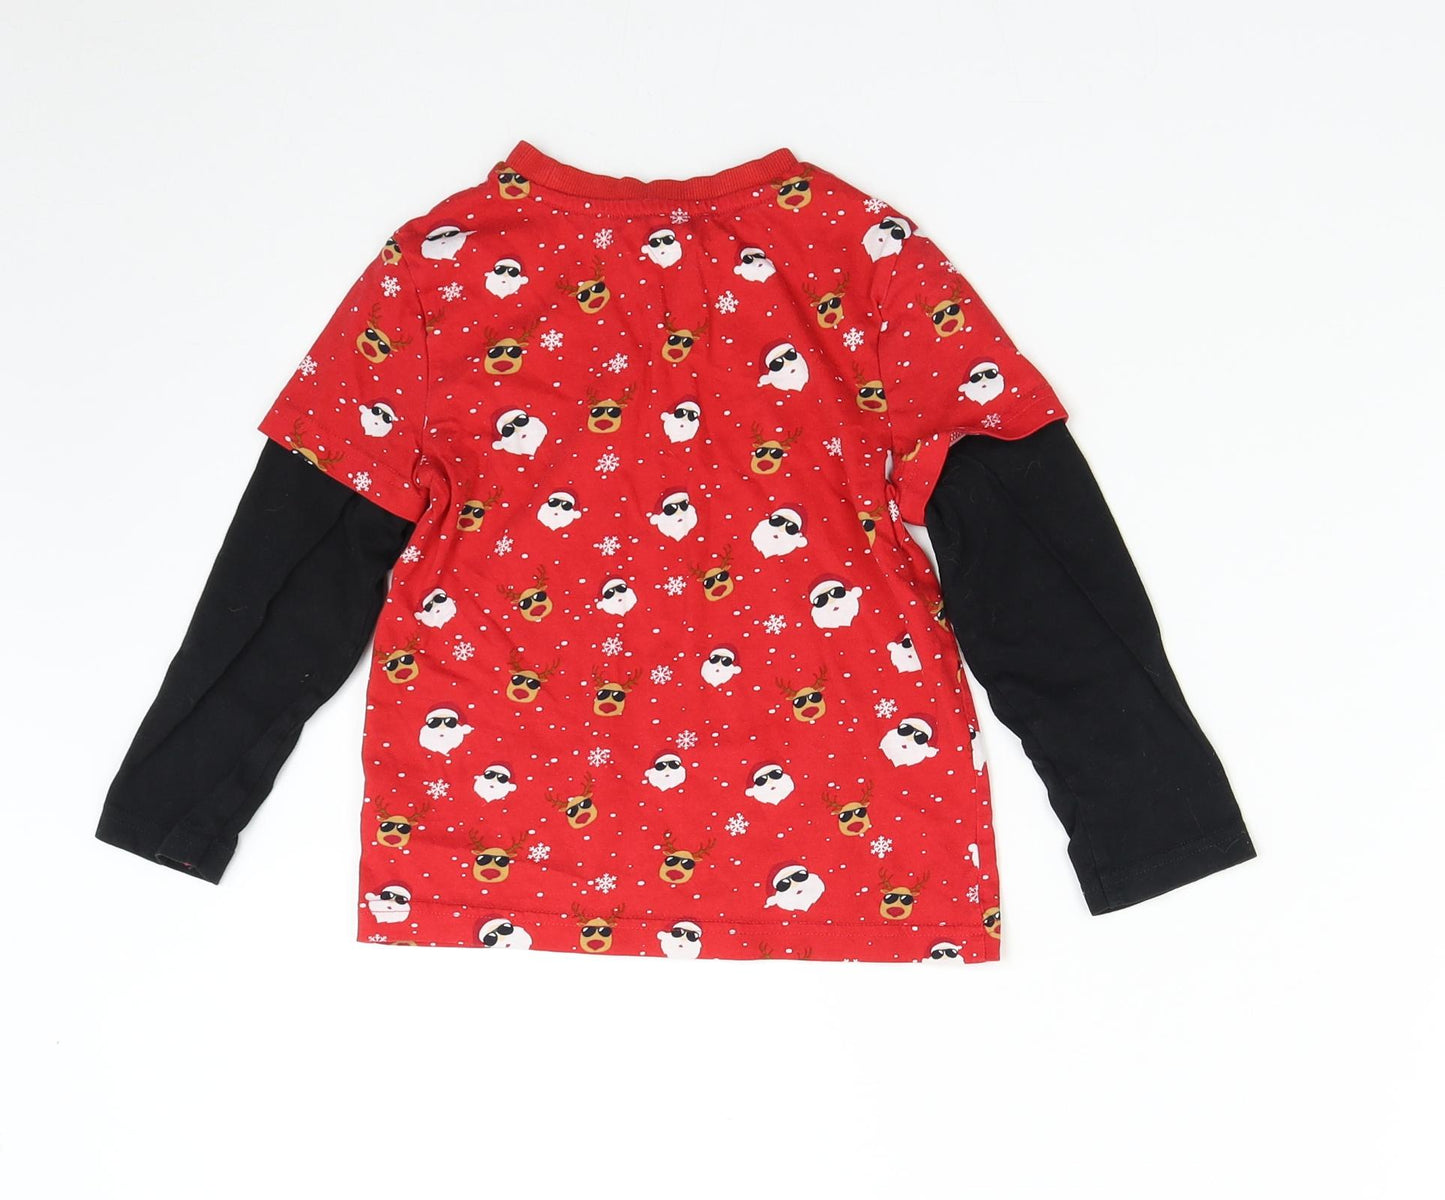 F&F Girls Red Solid  Top Pyjama Top Size 4-5 Years  - Christmas Santa Reindeer